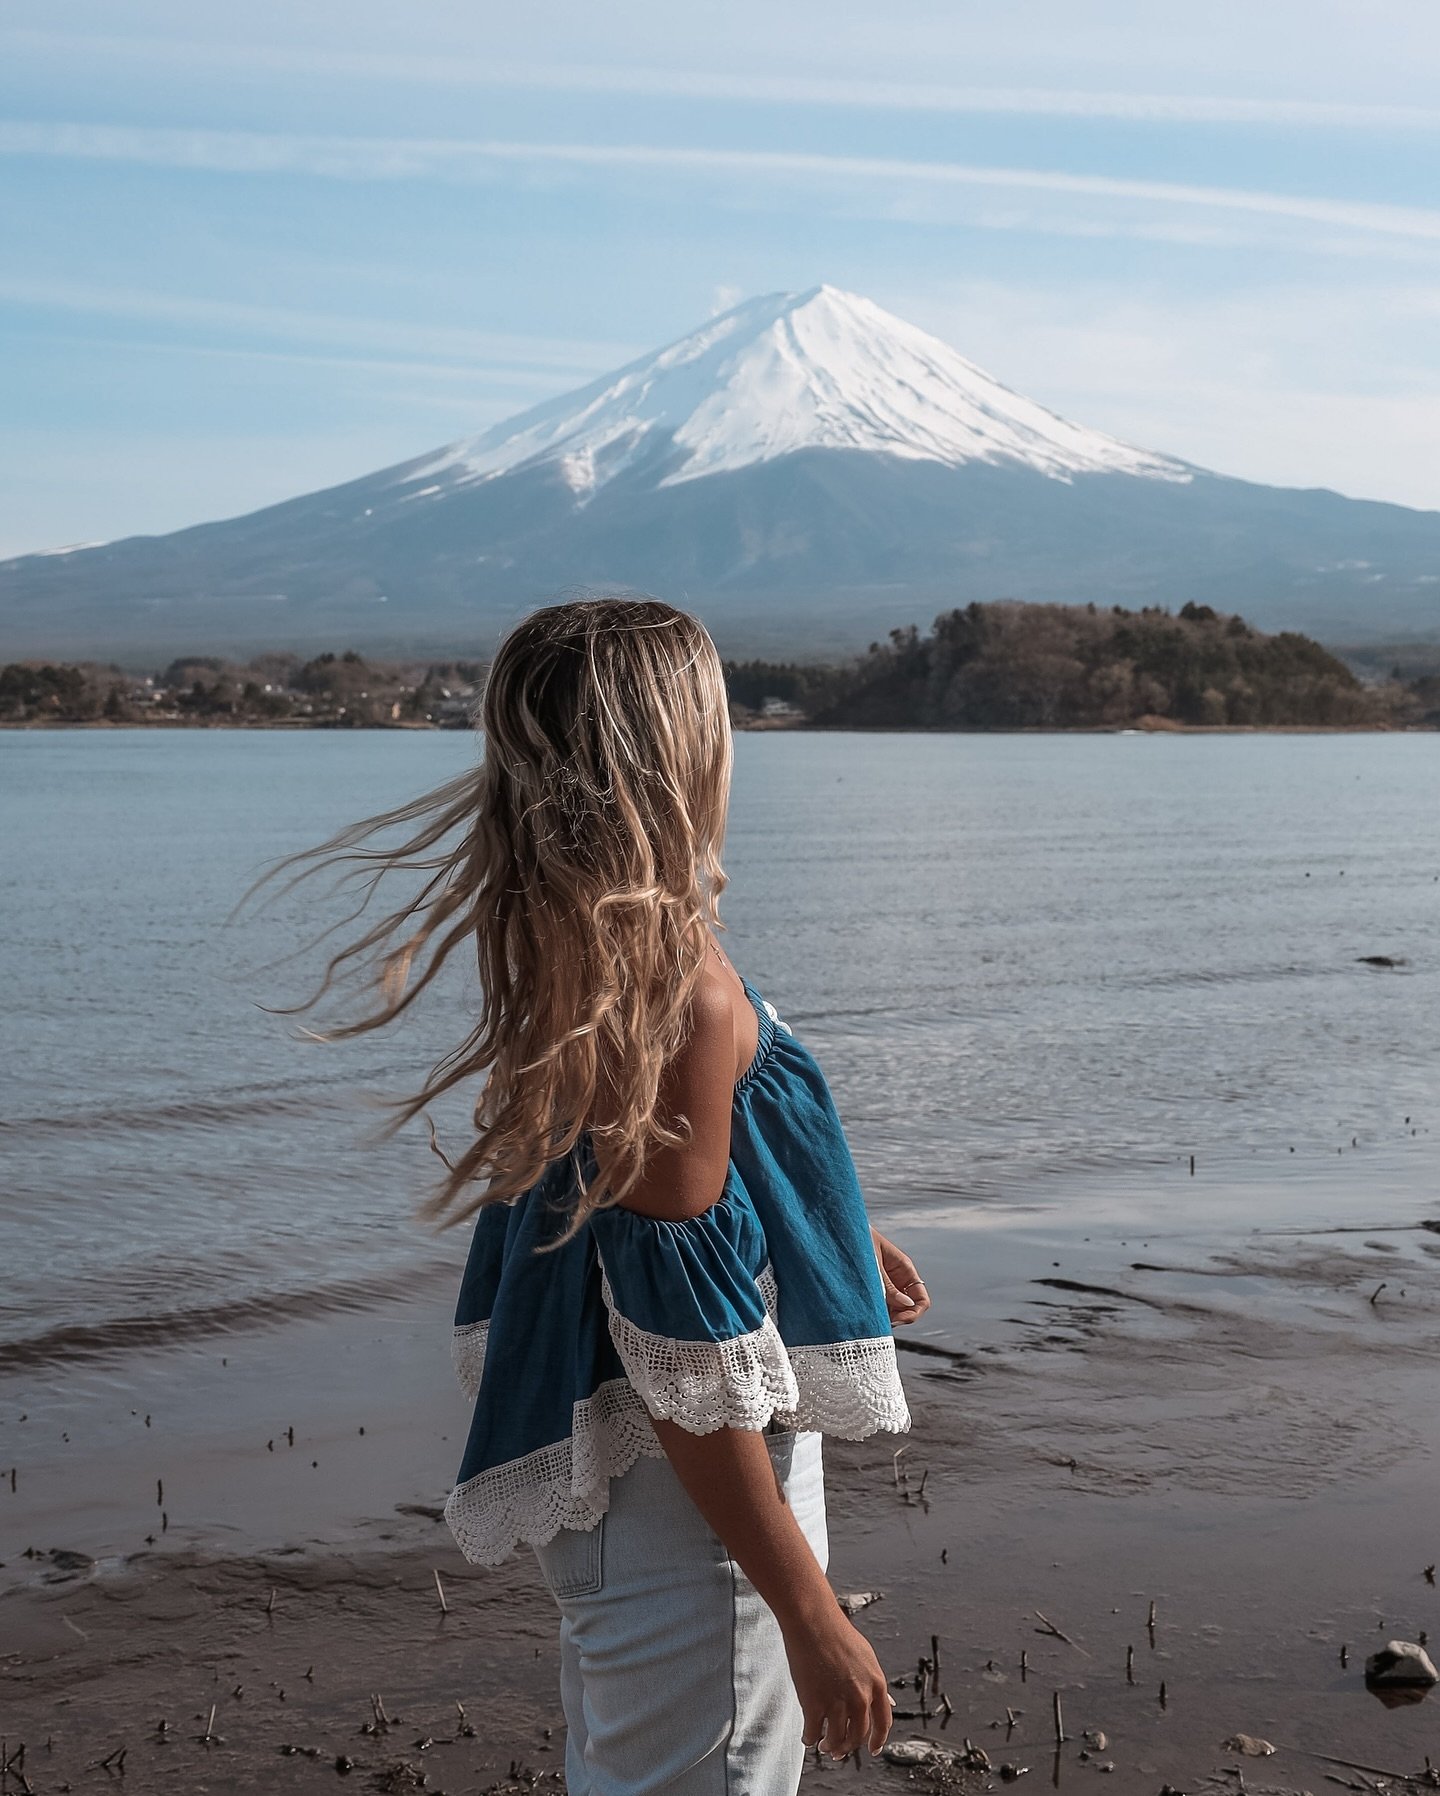 Mount Fuji literally blew me away! It looks 10 times more impressive in real life than in photos 🏔️

#mountfuji #fujijapan #mountfujidaytrip #lakekawaguchi #oishipark